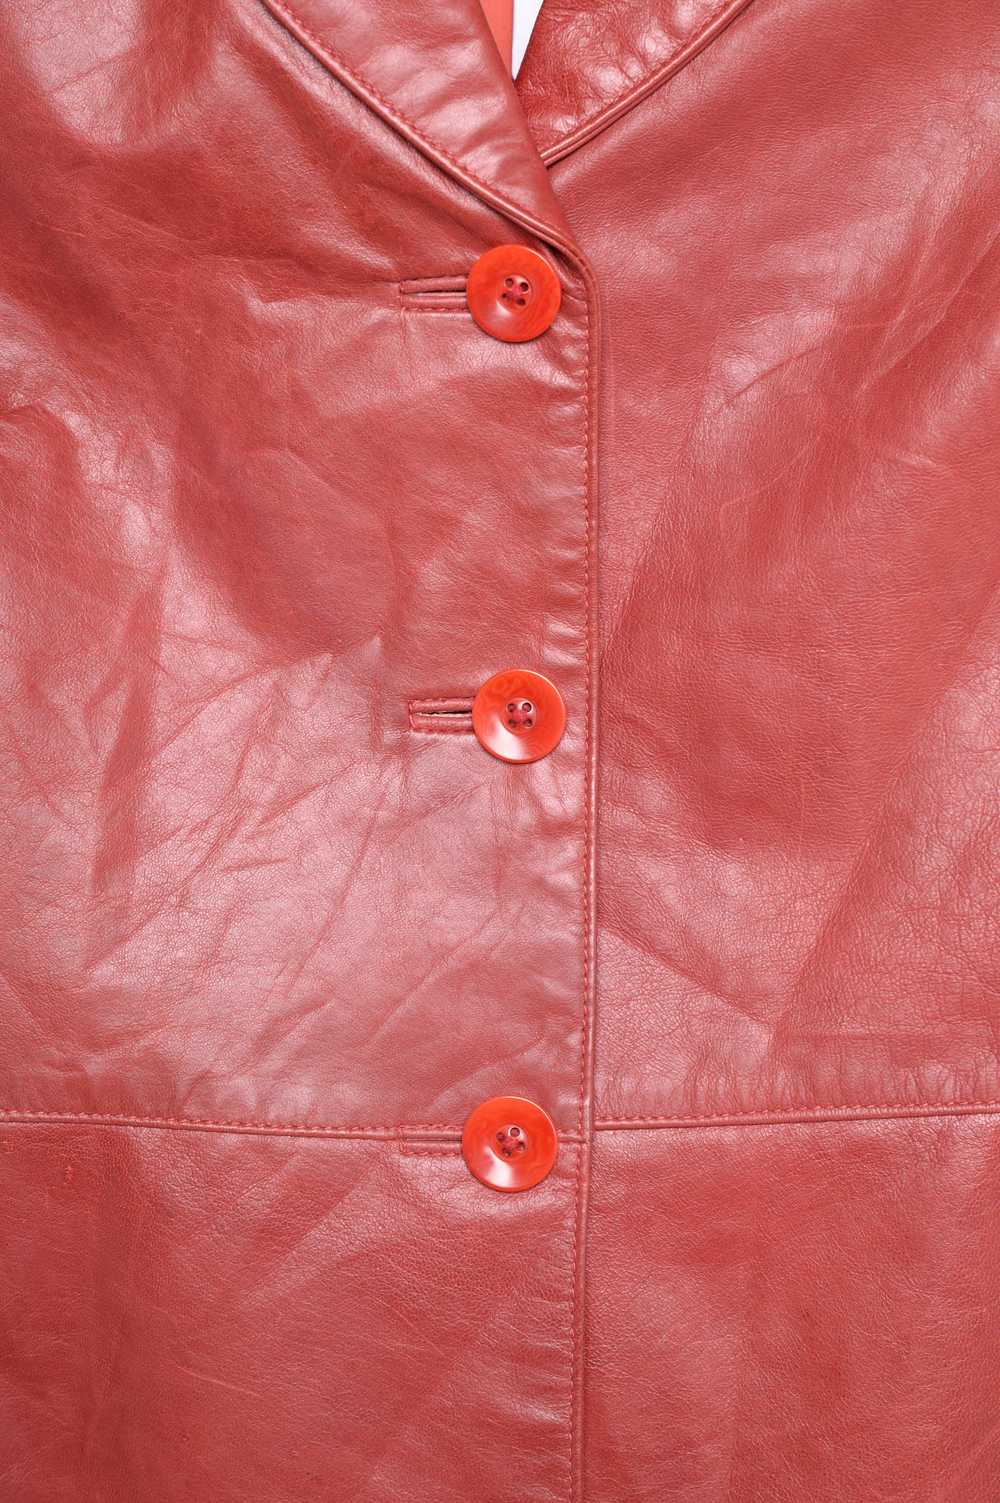 Rust Leather Jacket - image 3